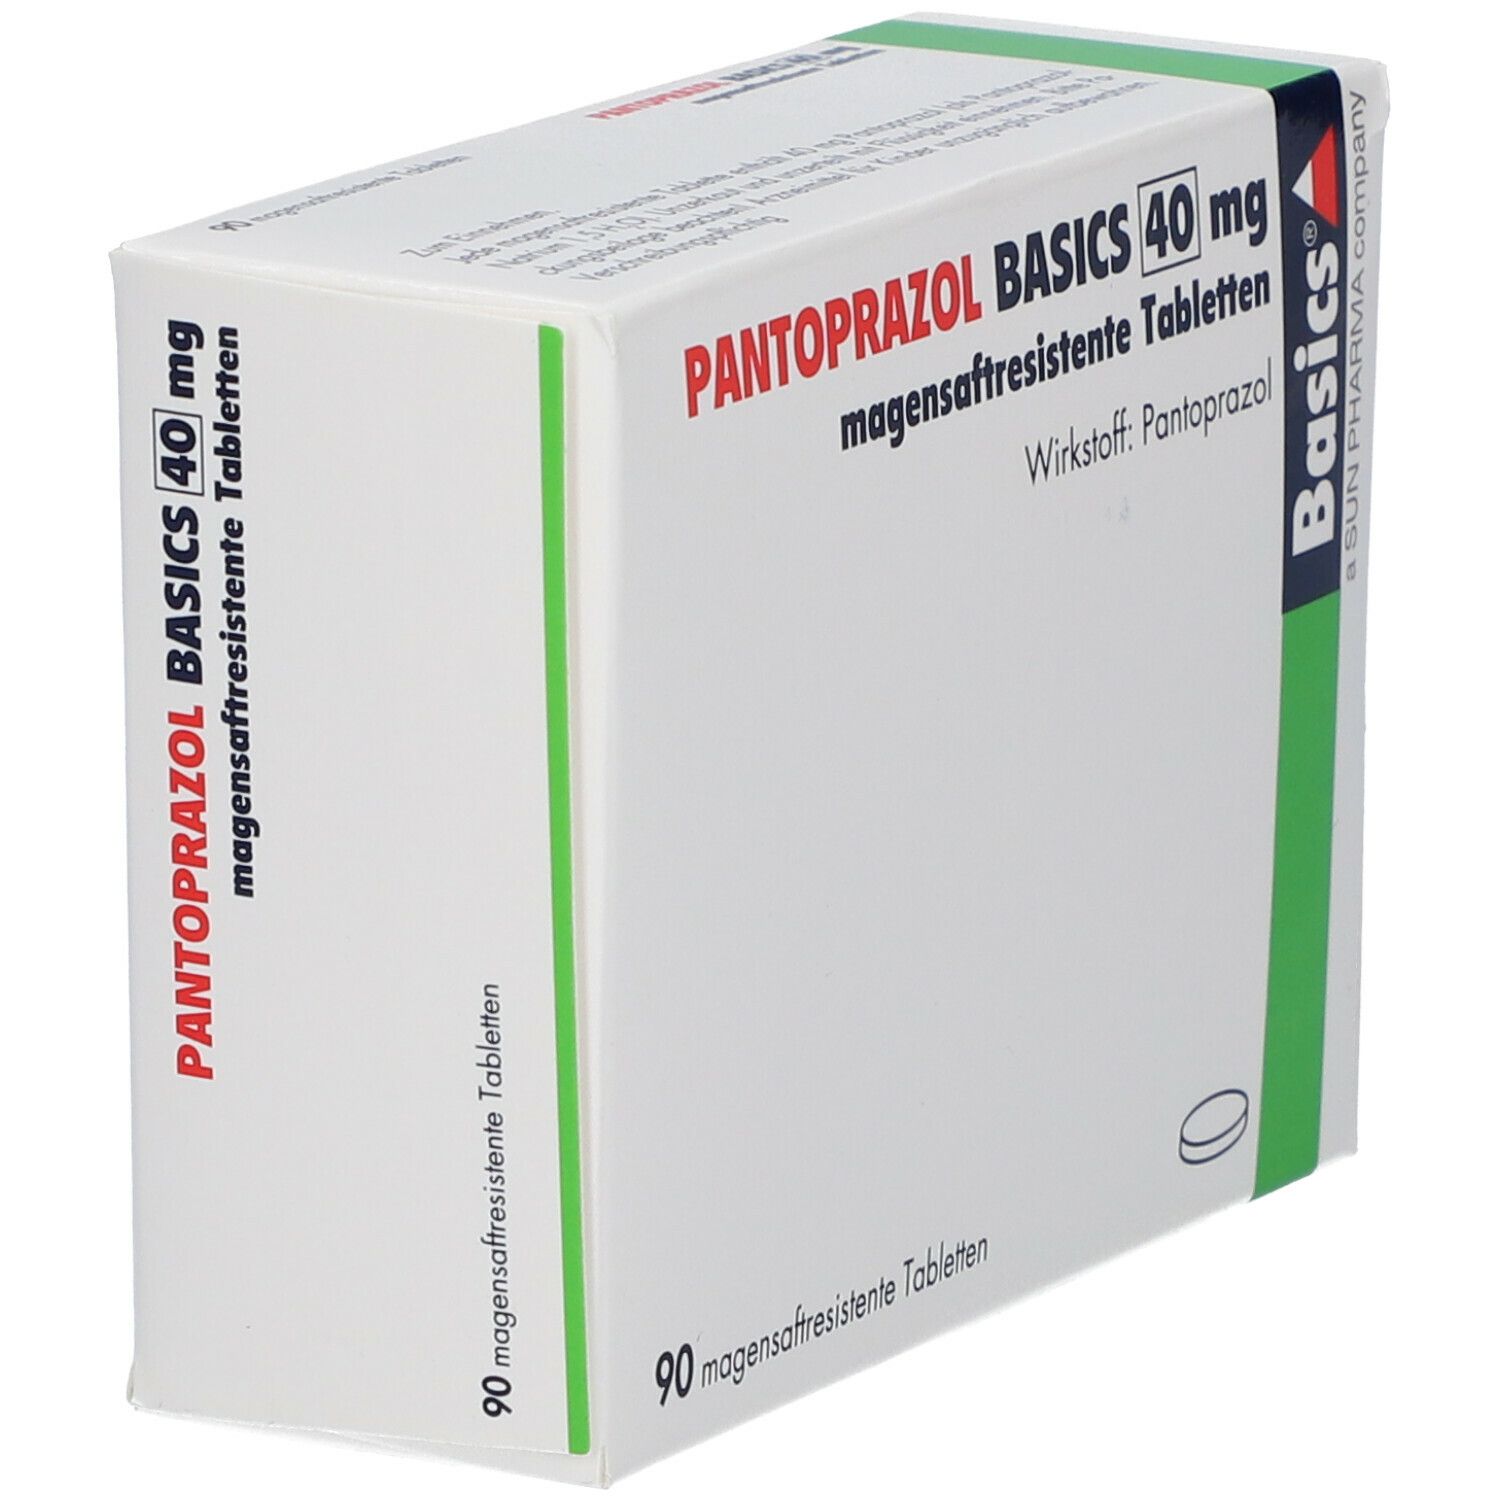 PANTOPRAZOL BASICS 40 mg